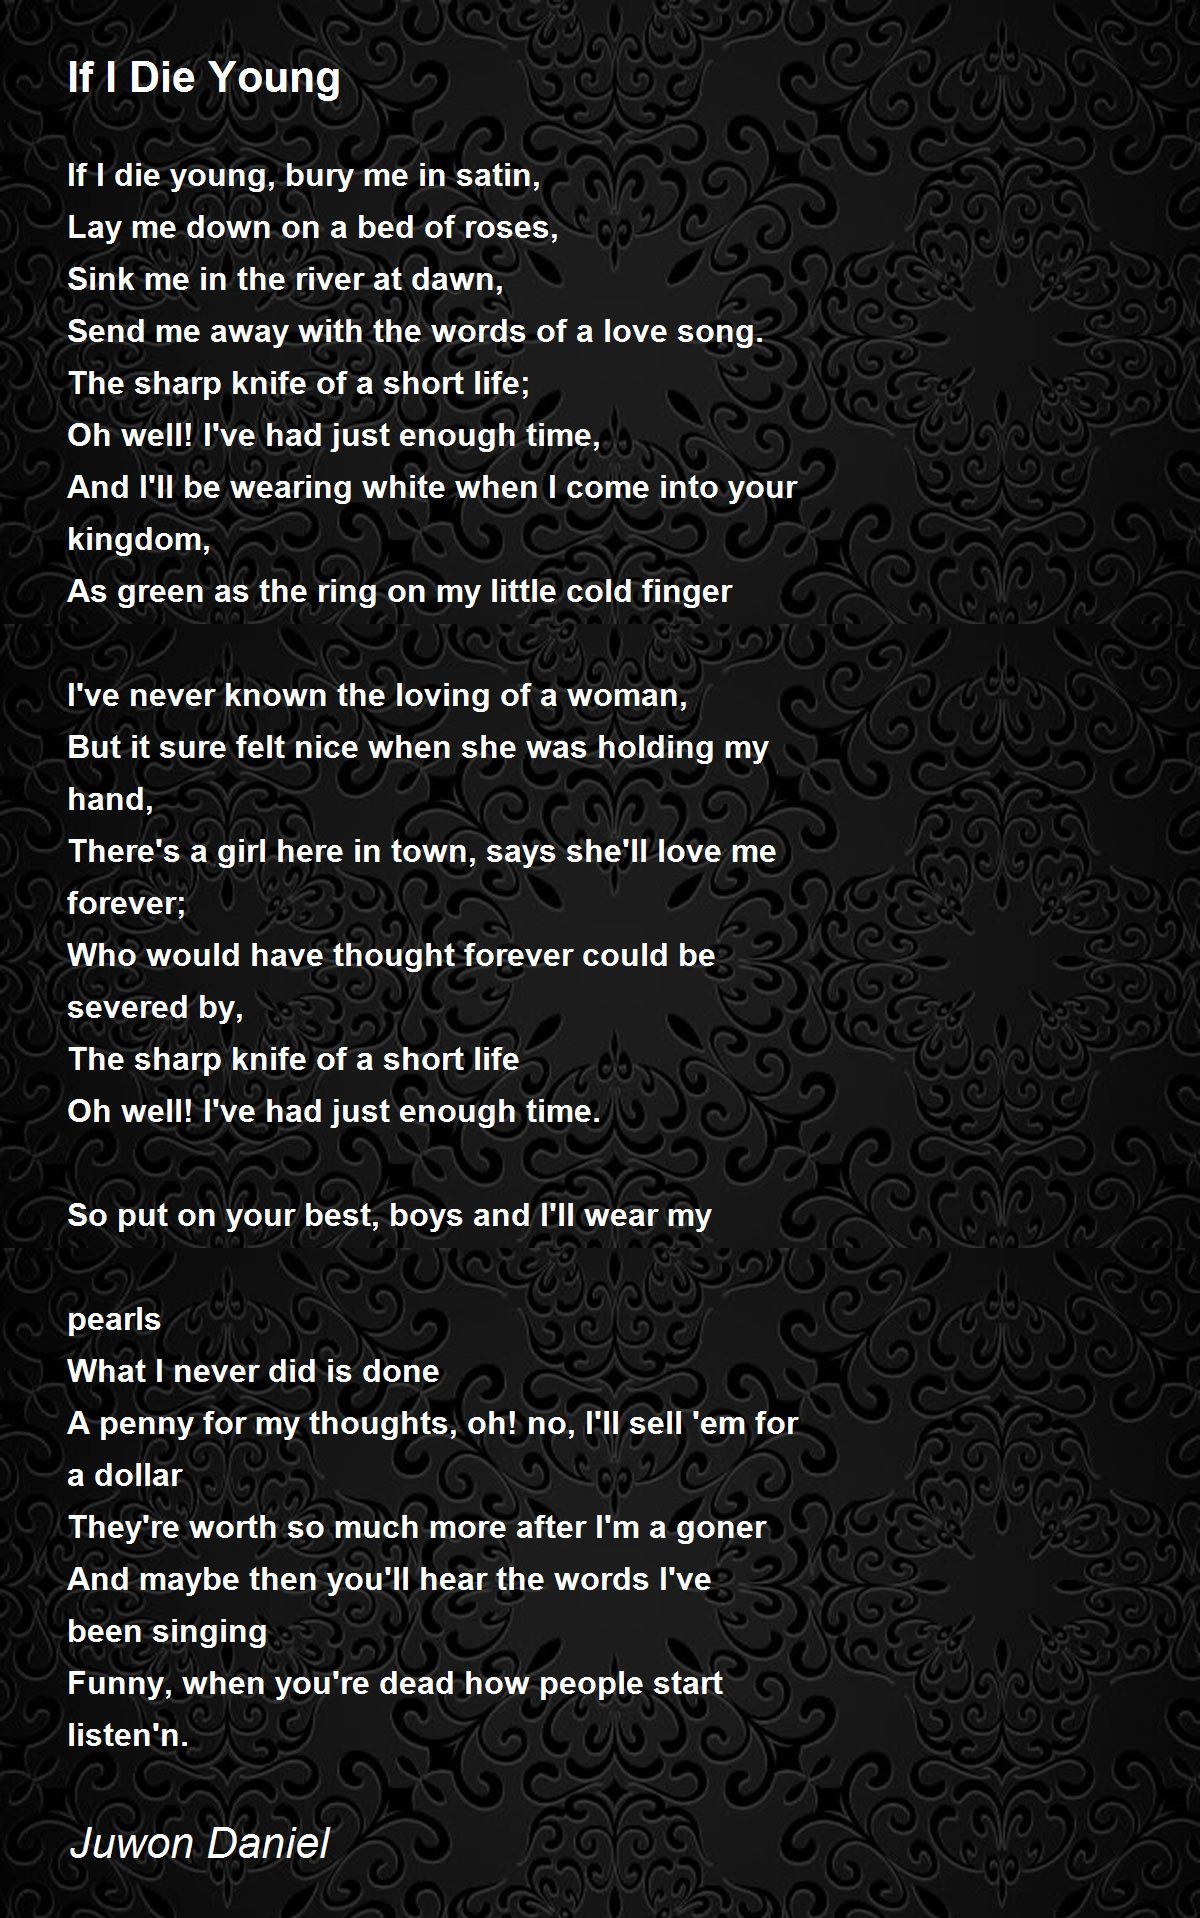 If I Die Young Poem by Juwon Daniel - Poem Hunter